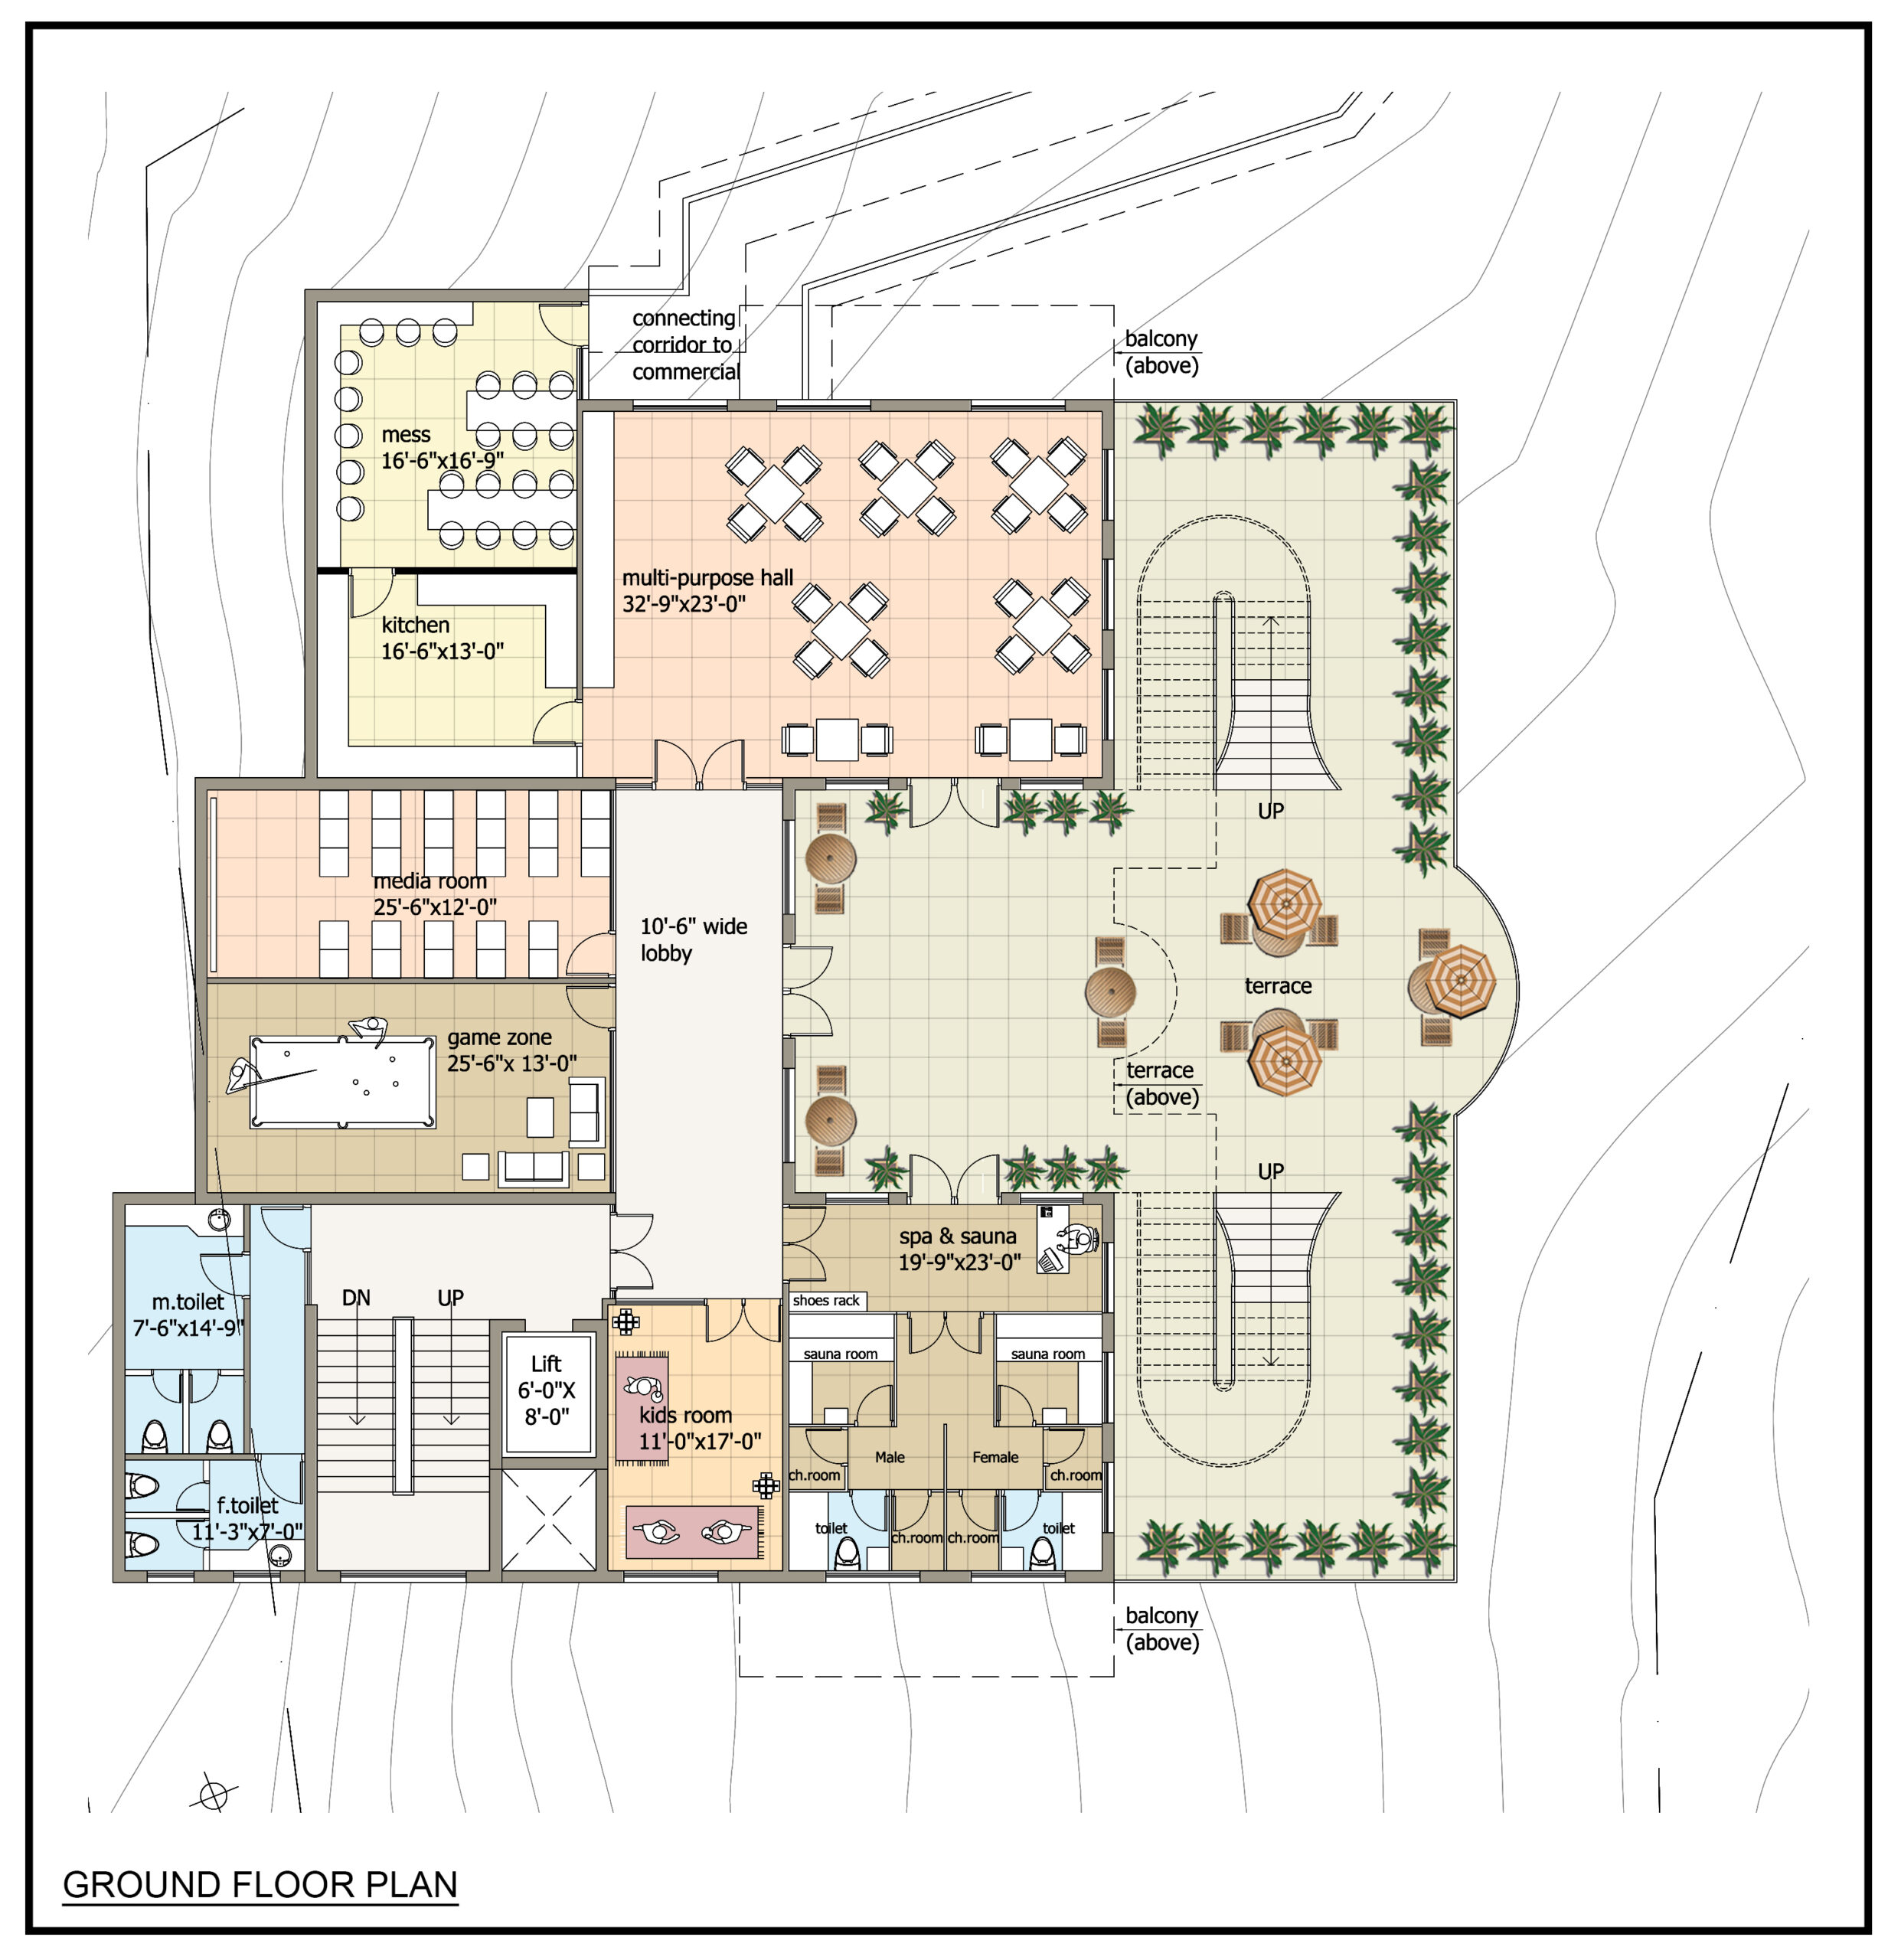 Club House - Ground Floor Plan